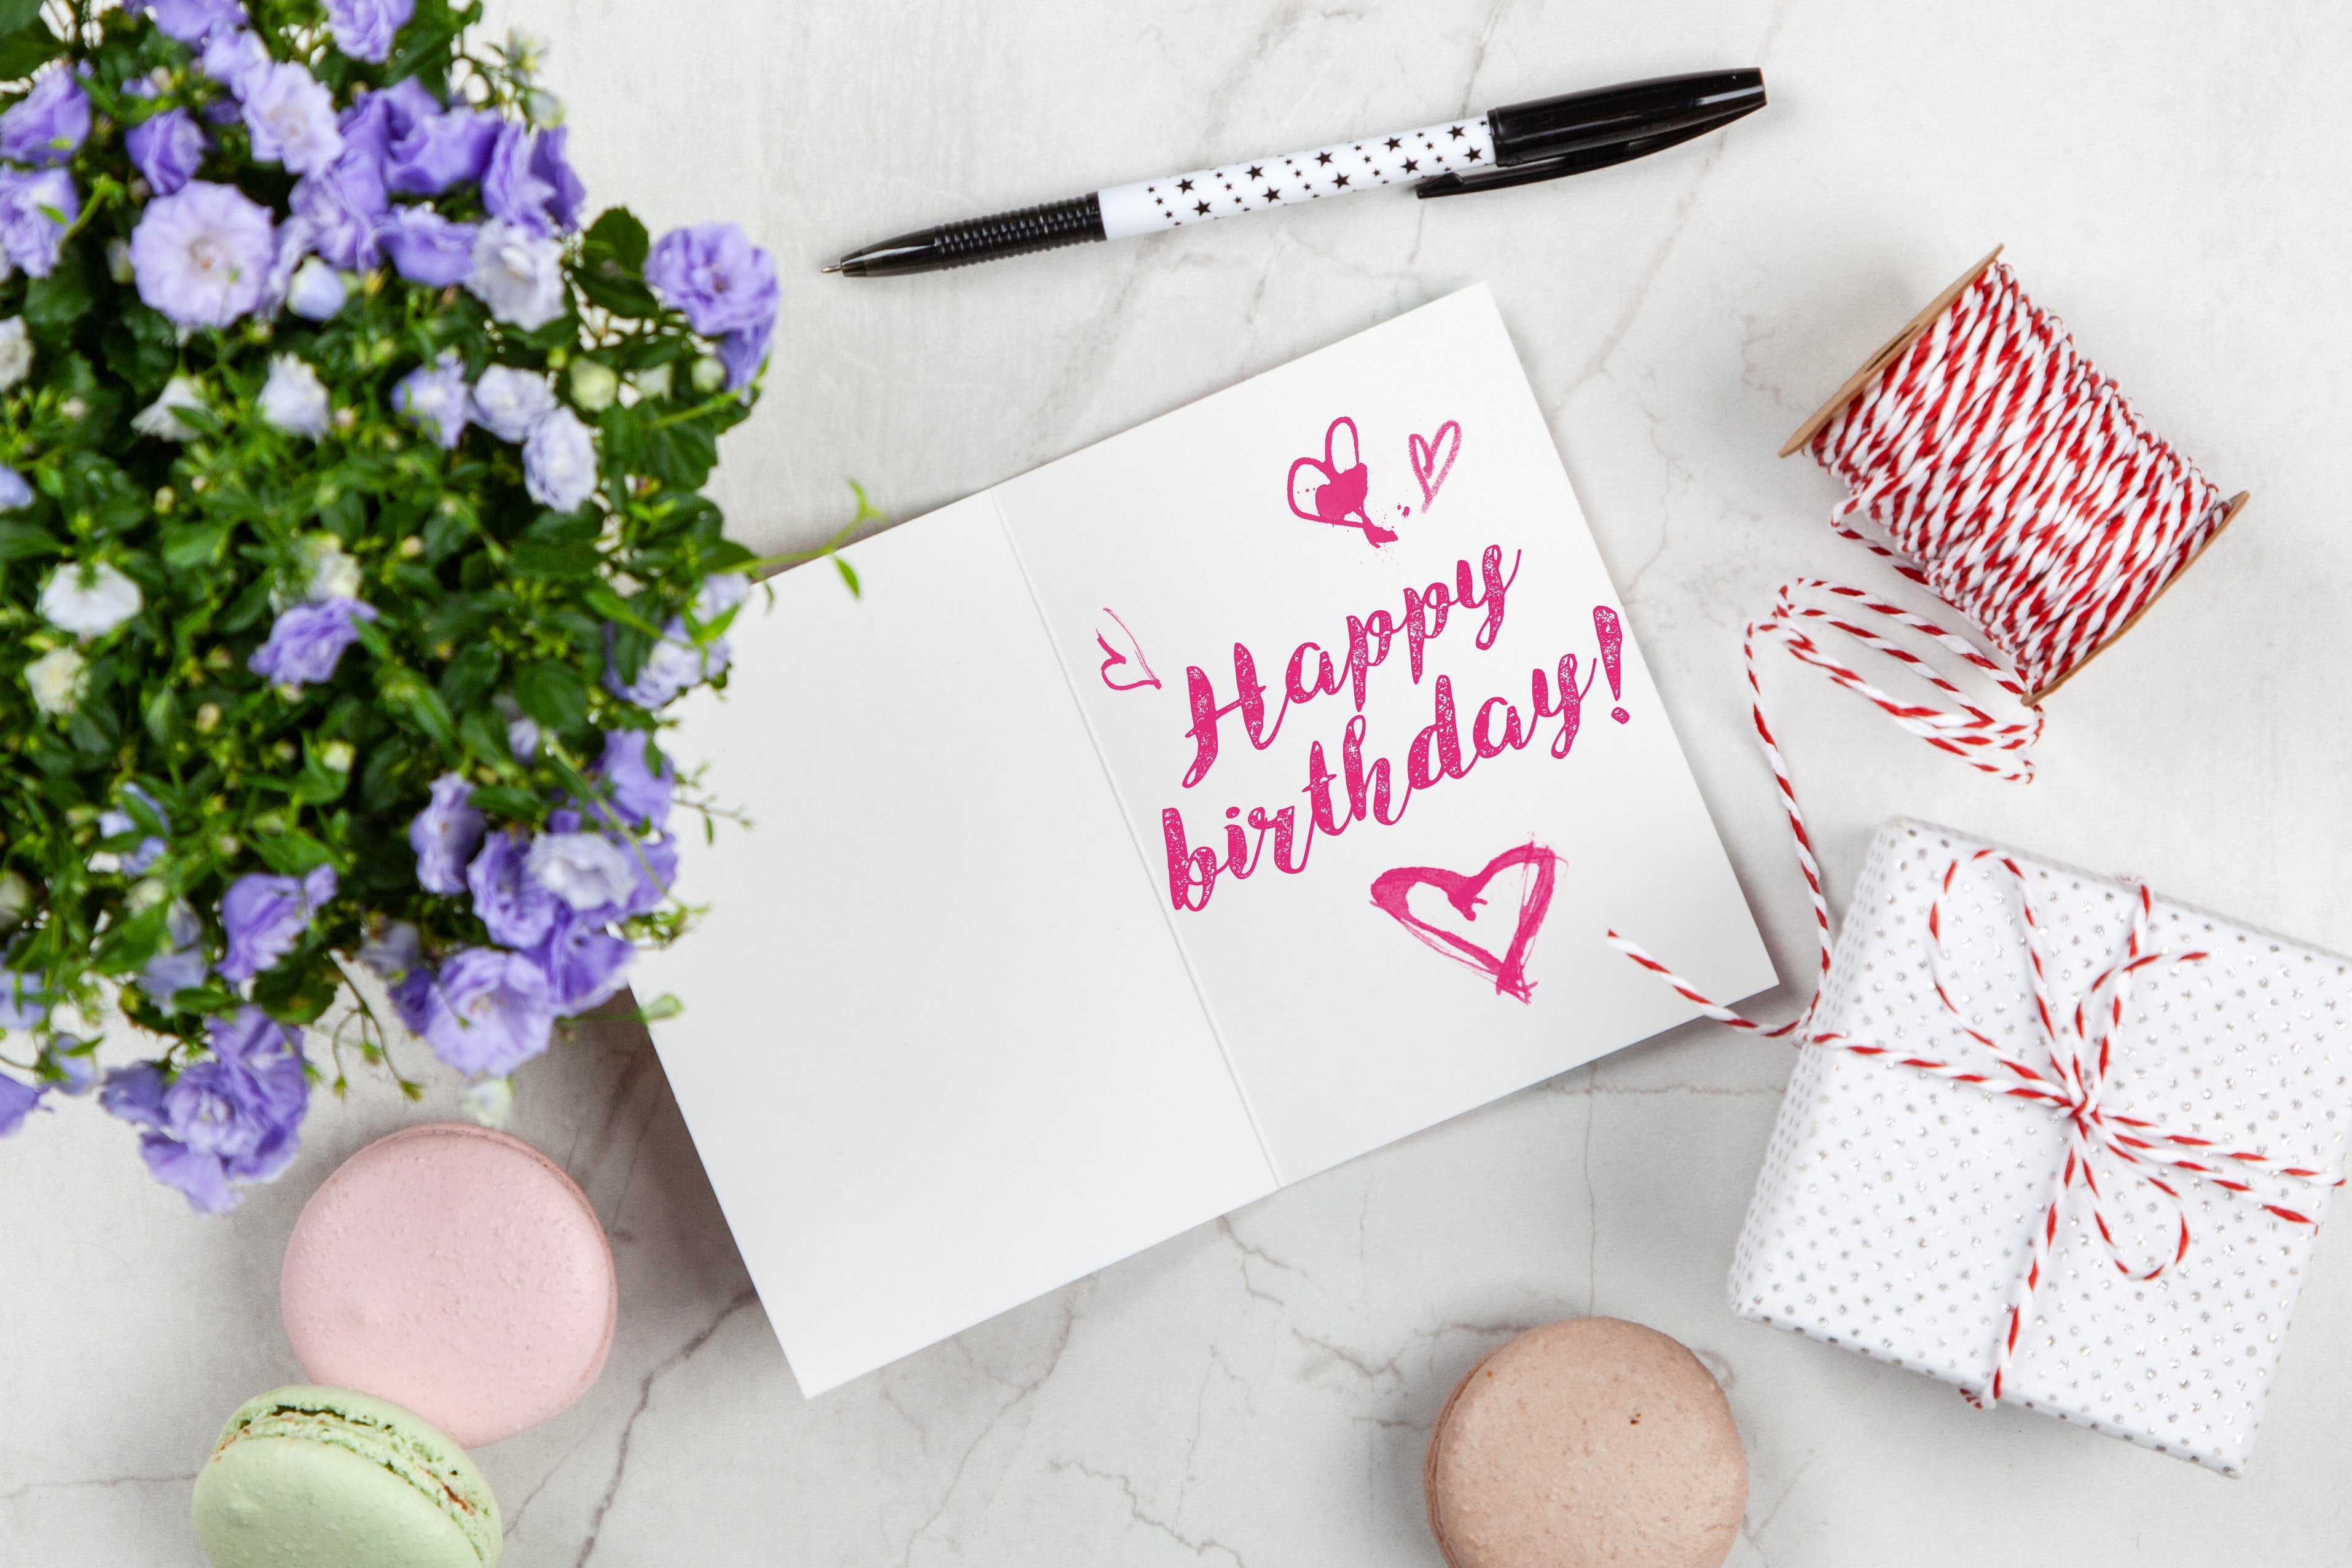 A happy birthday card. | Source: Pexels